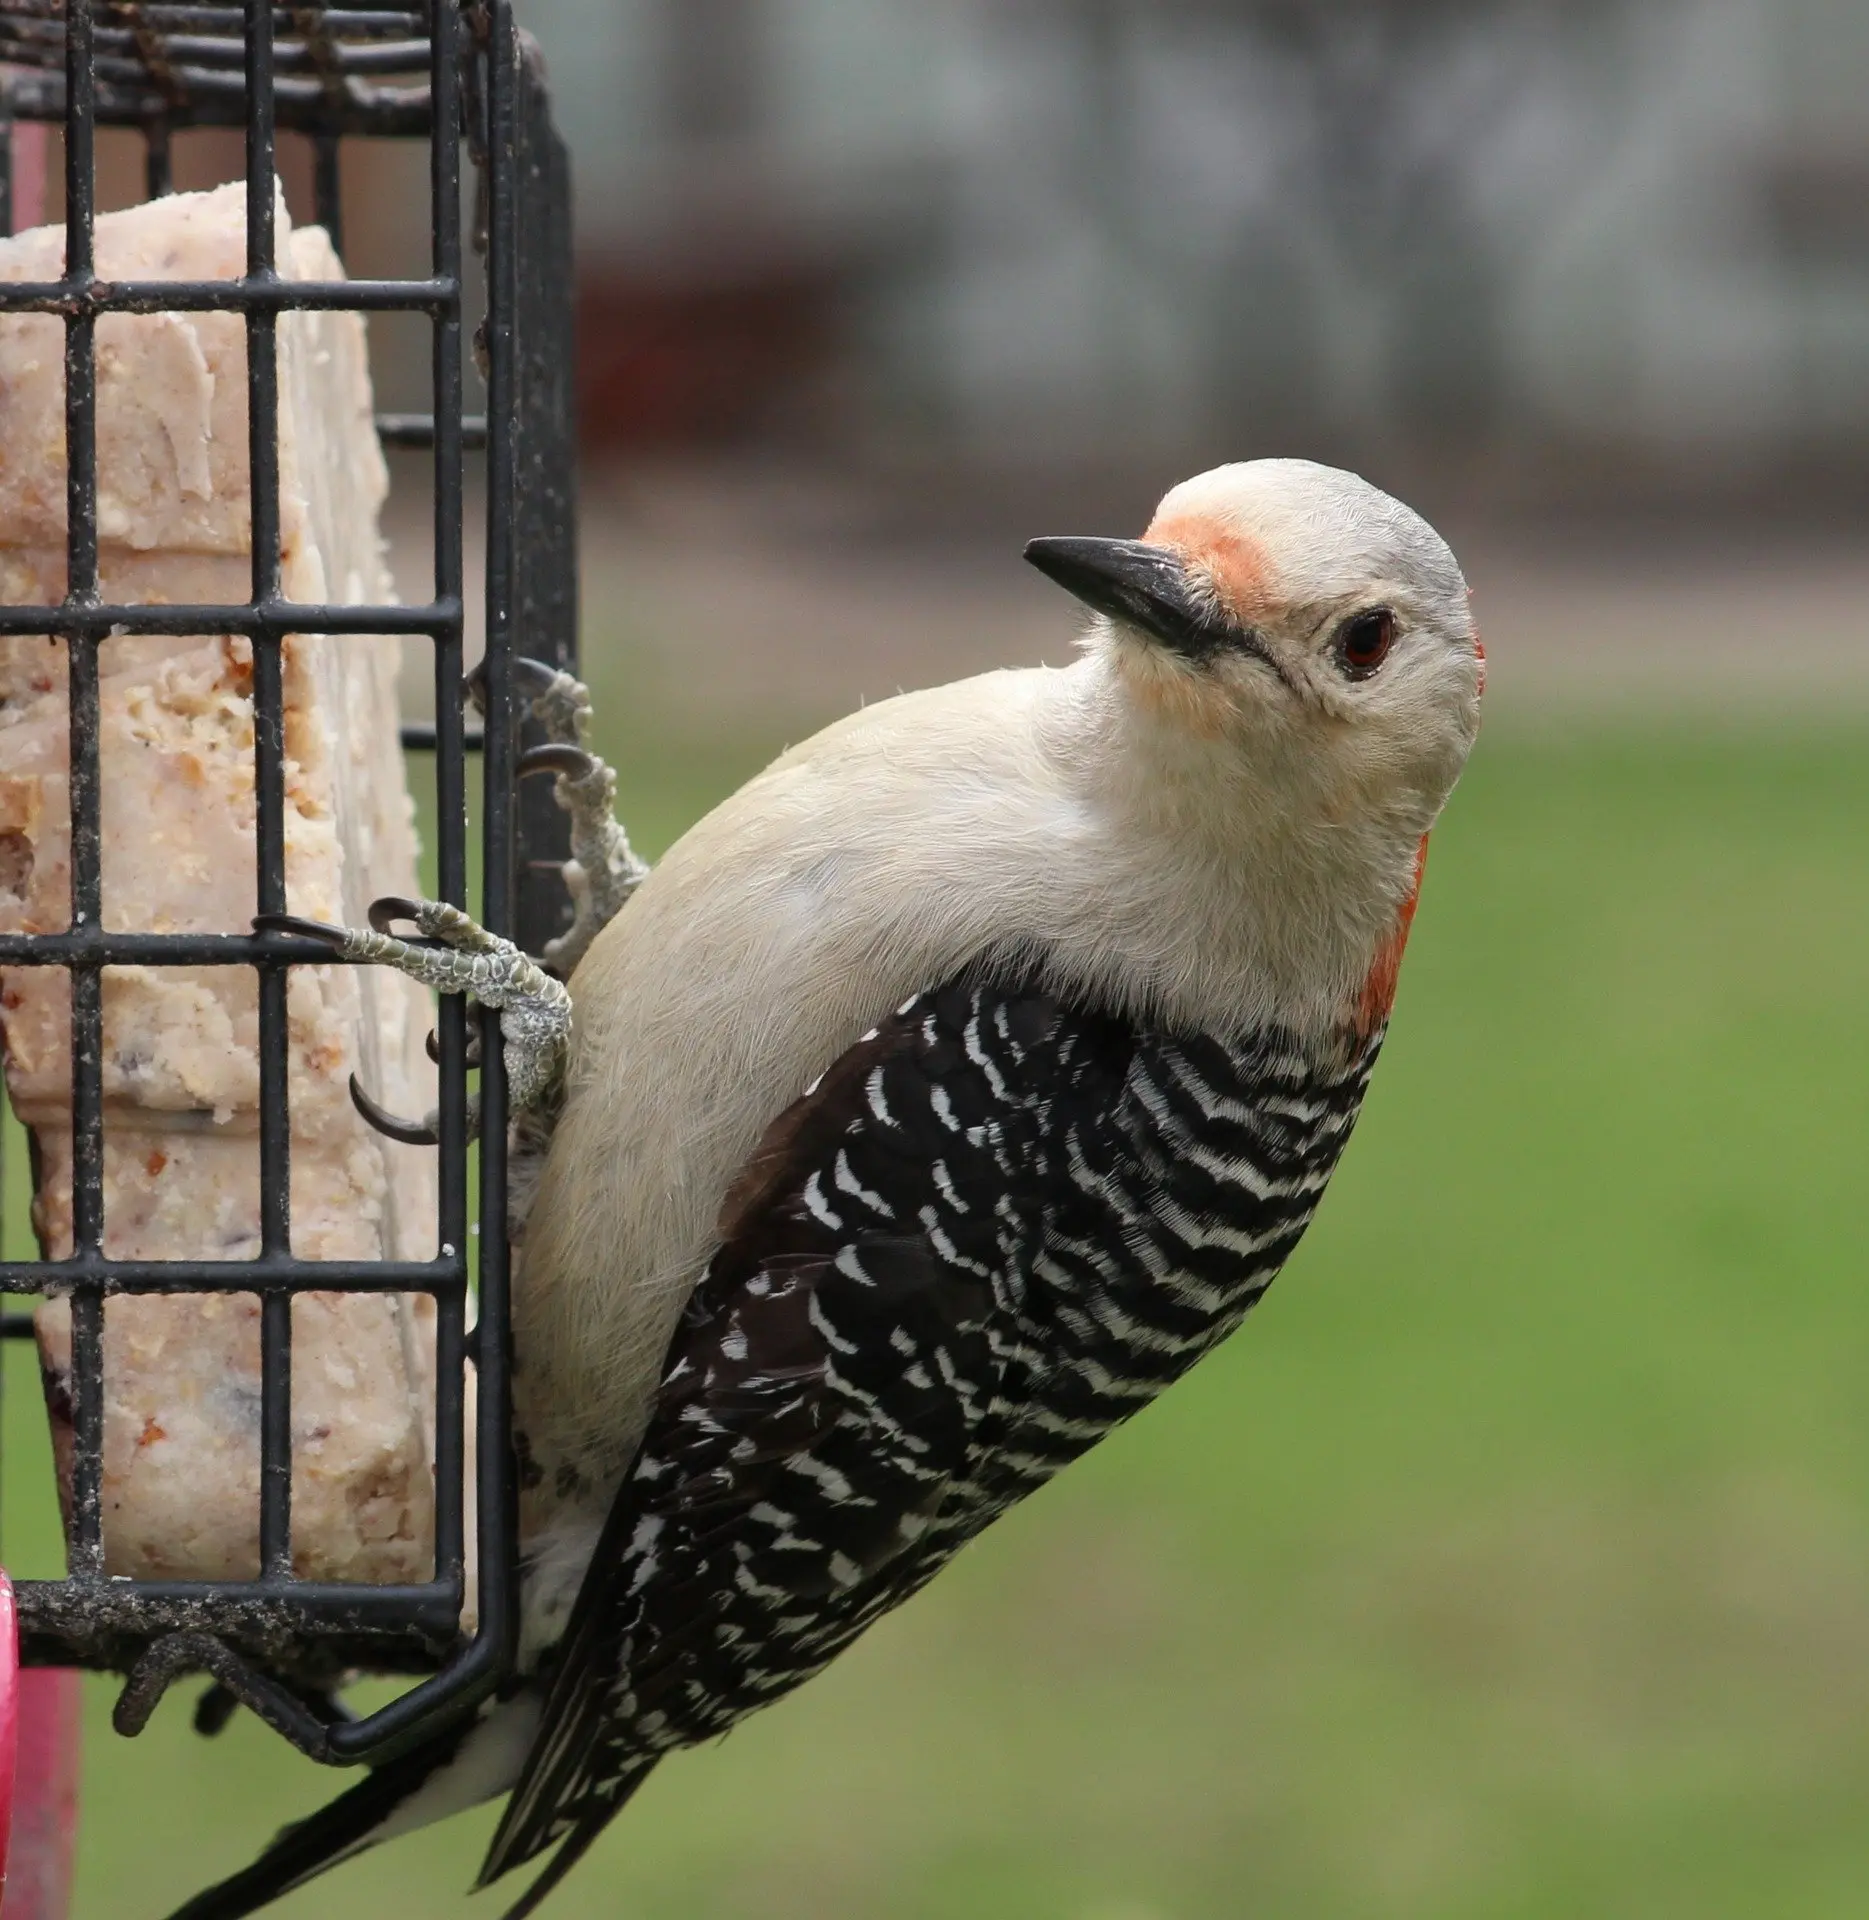 Red-bellied woodpecker on suet feederfemale for identification